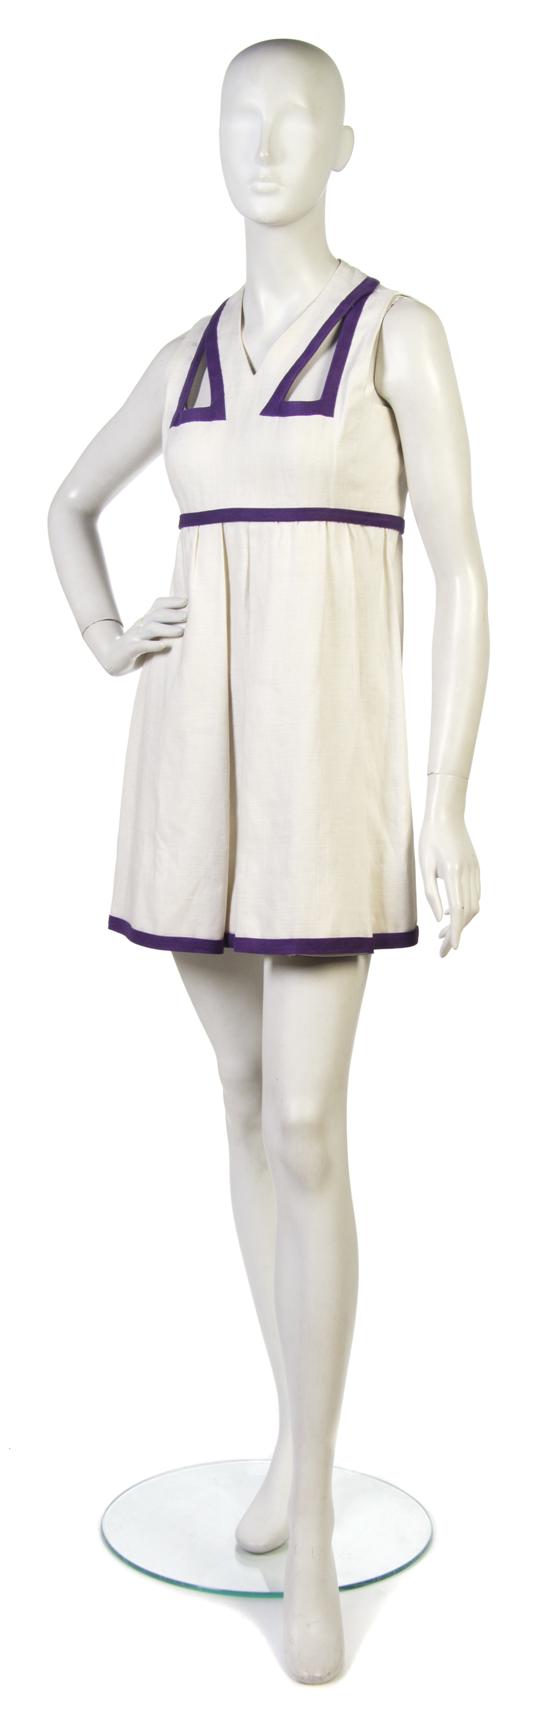 A Donald Brooks White Linen Dress